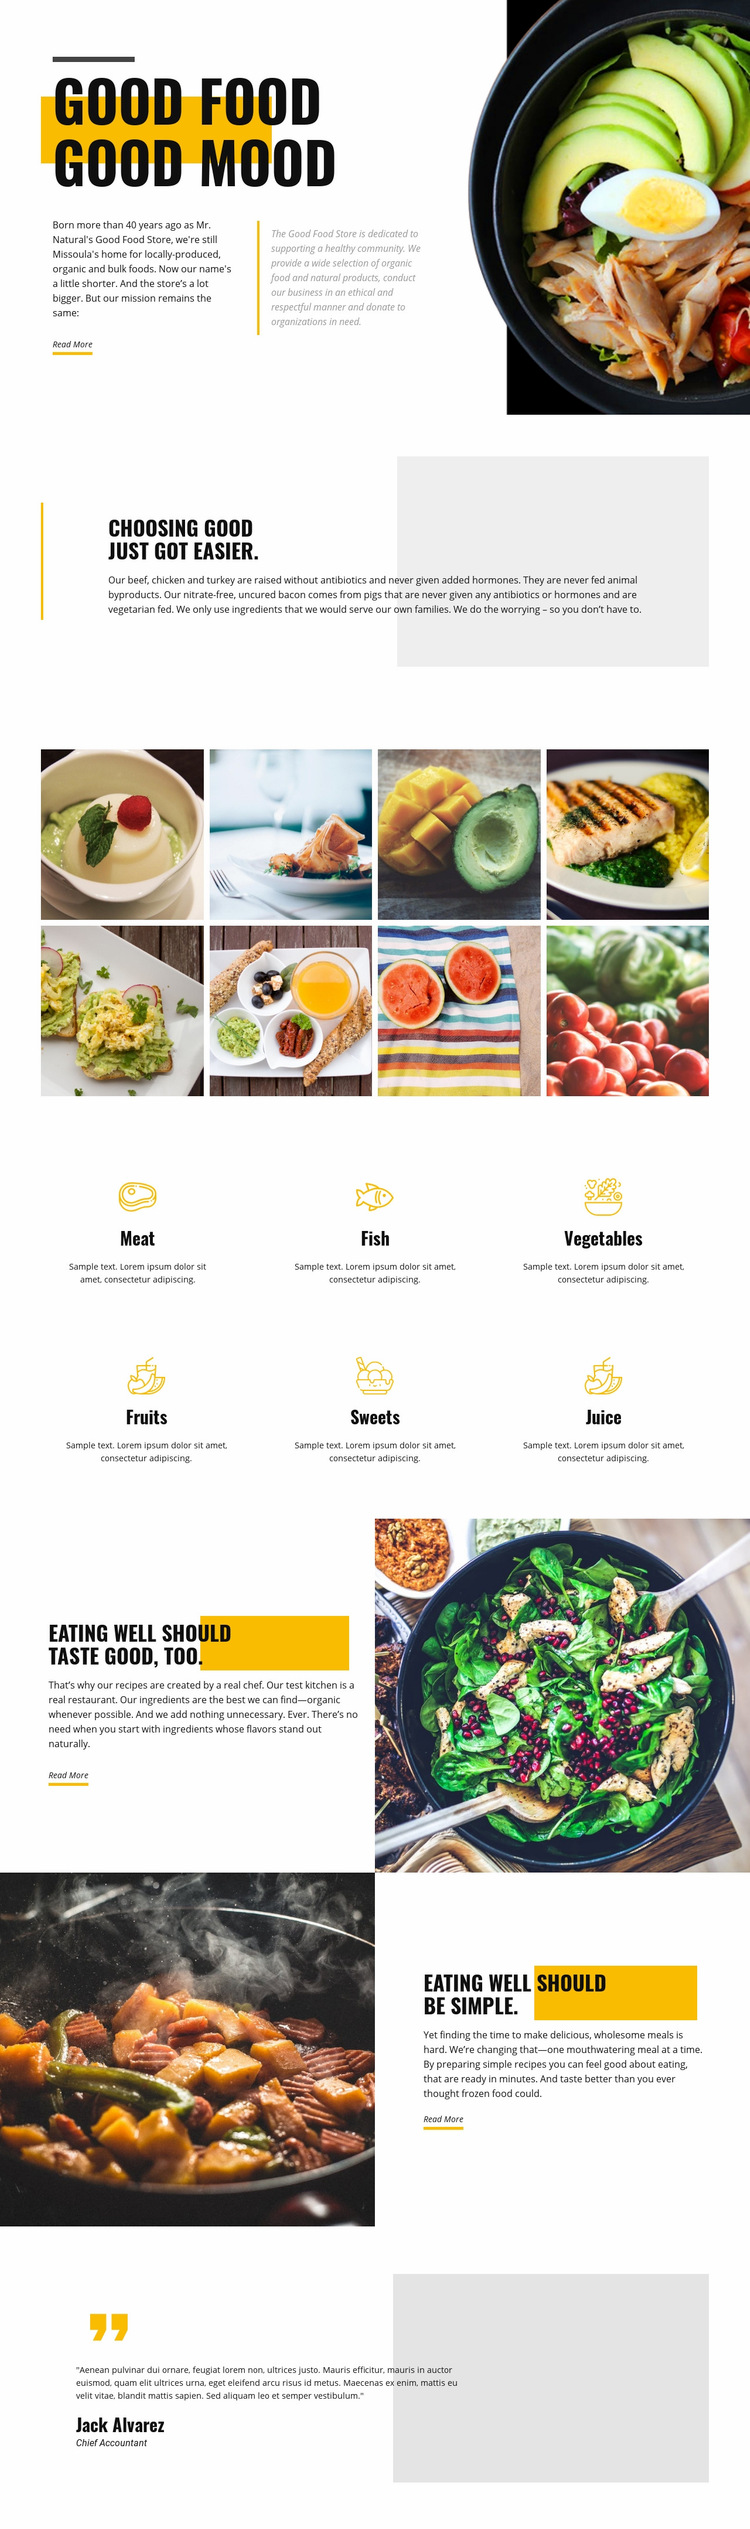 Good mood good food Web Page Design